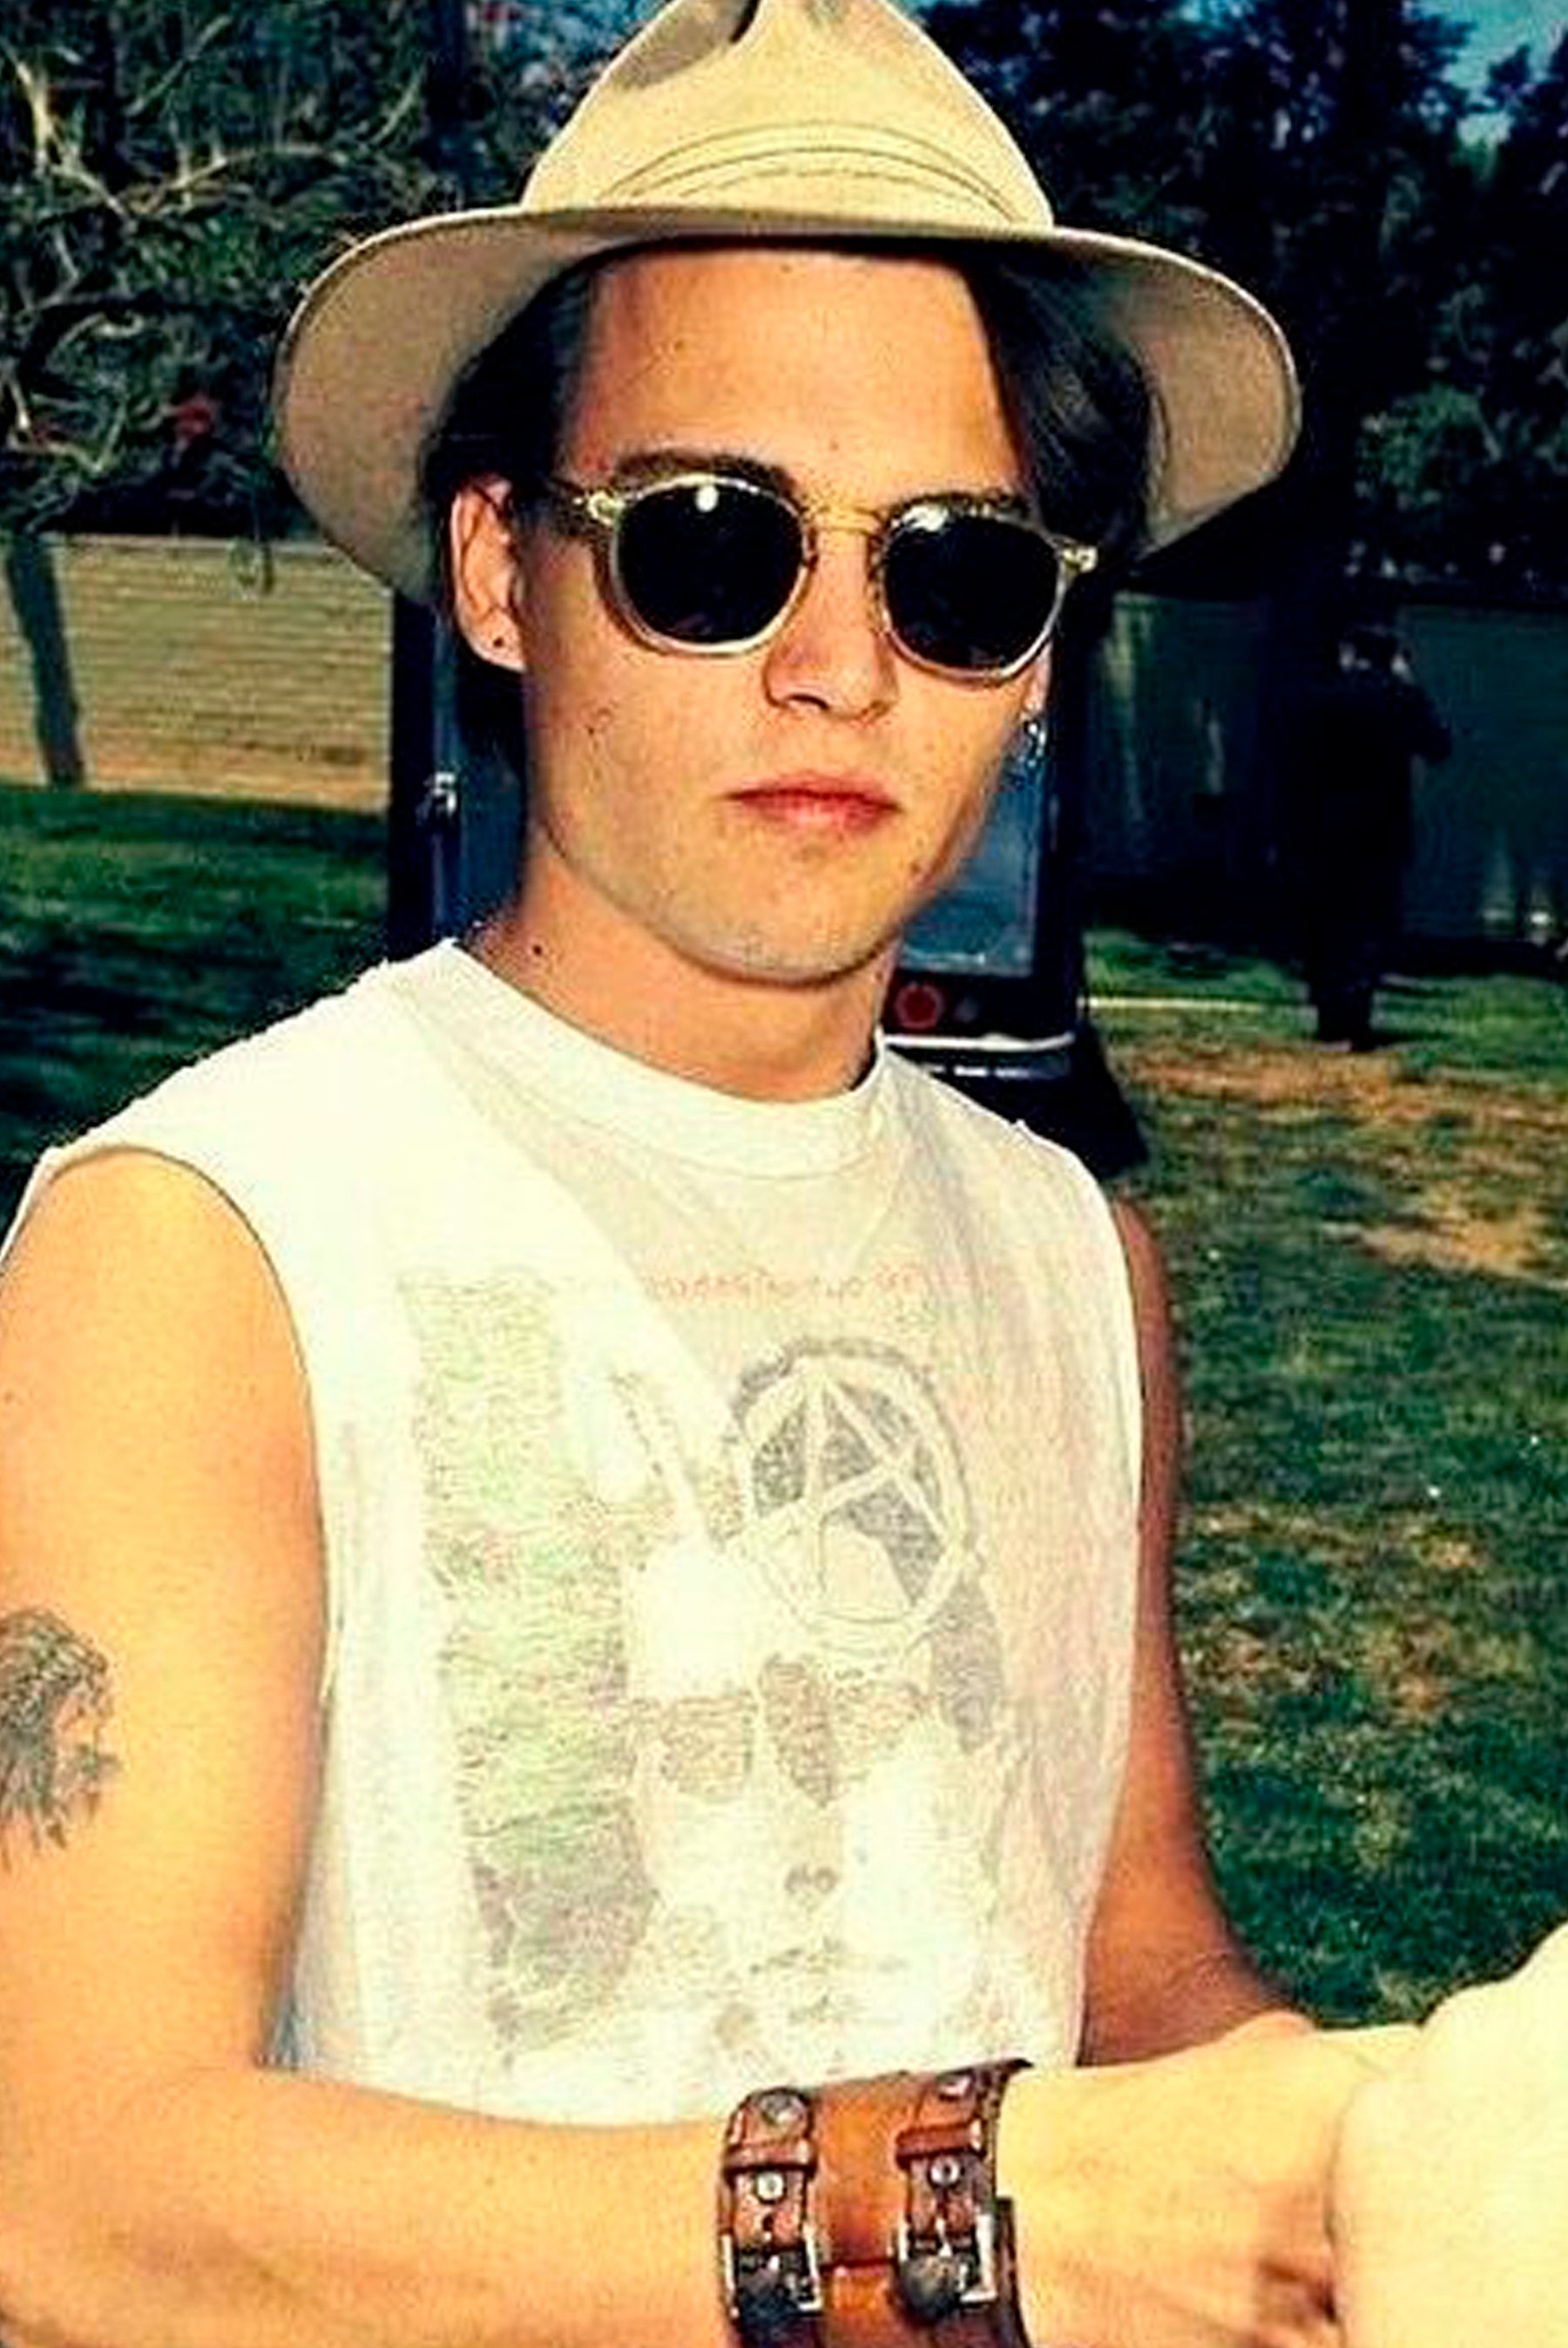 photo of Johnny Depp wearing sunglasses